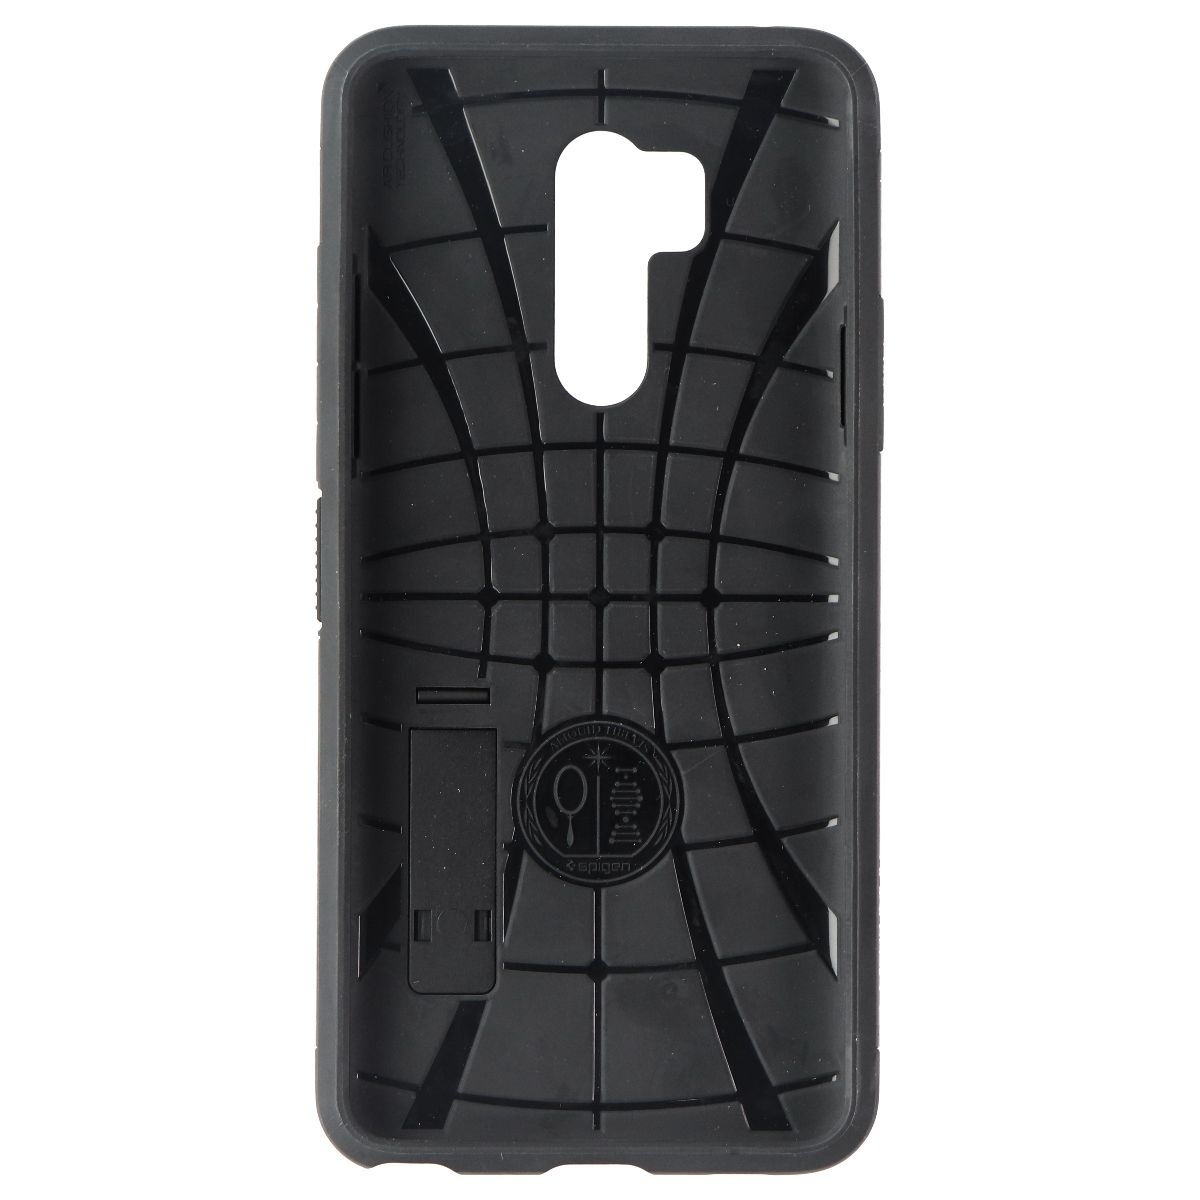 Spigen Slim Armor Case With Kickstand For LG G7 ThinQ - Black